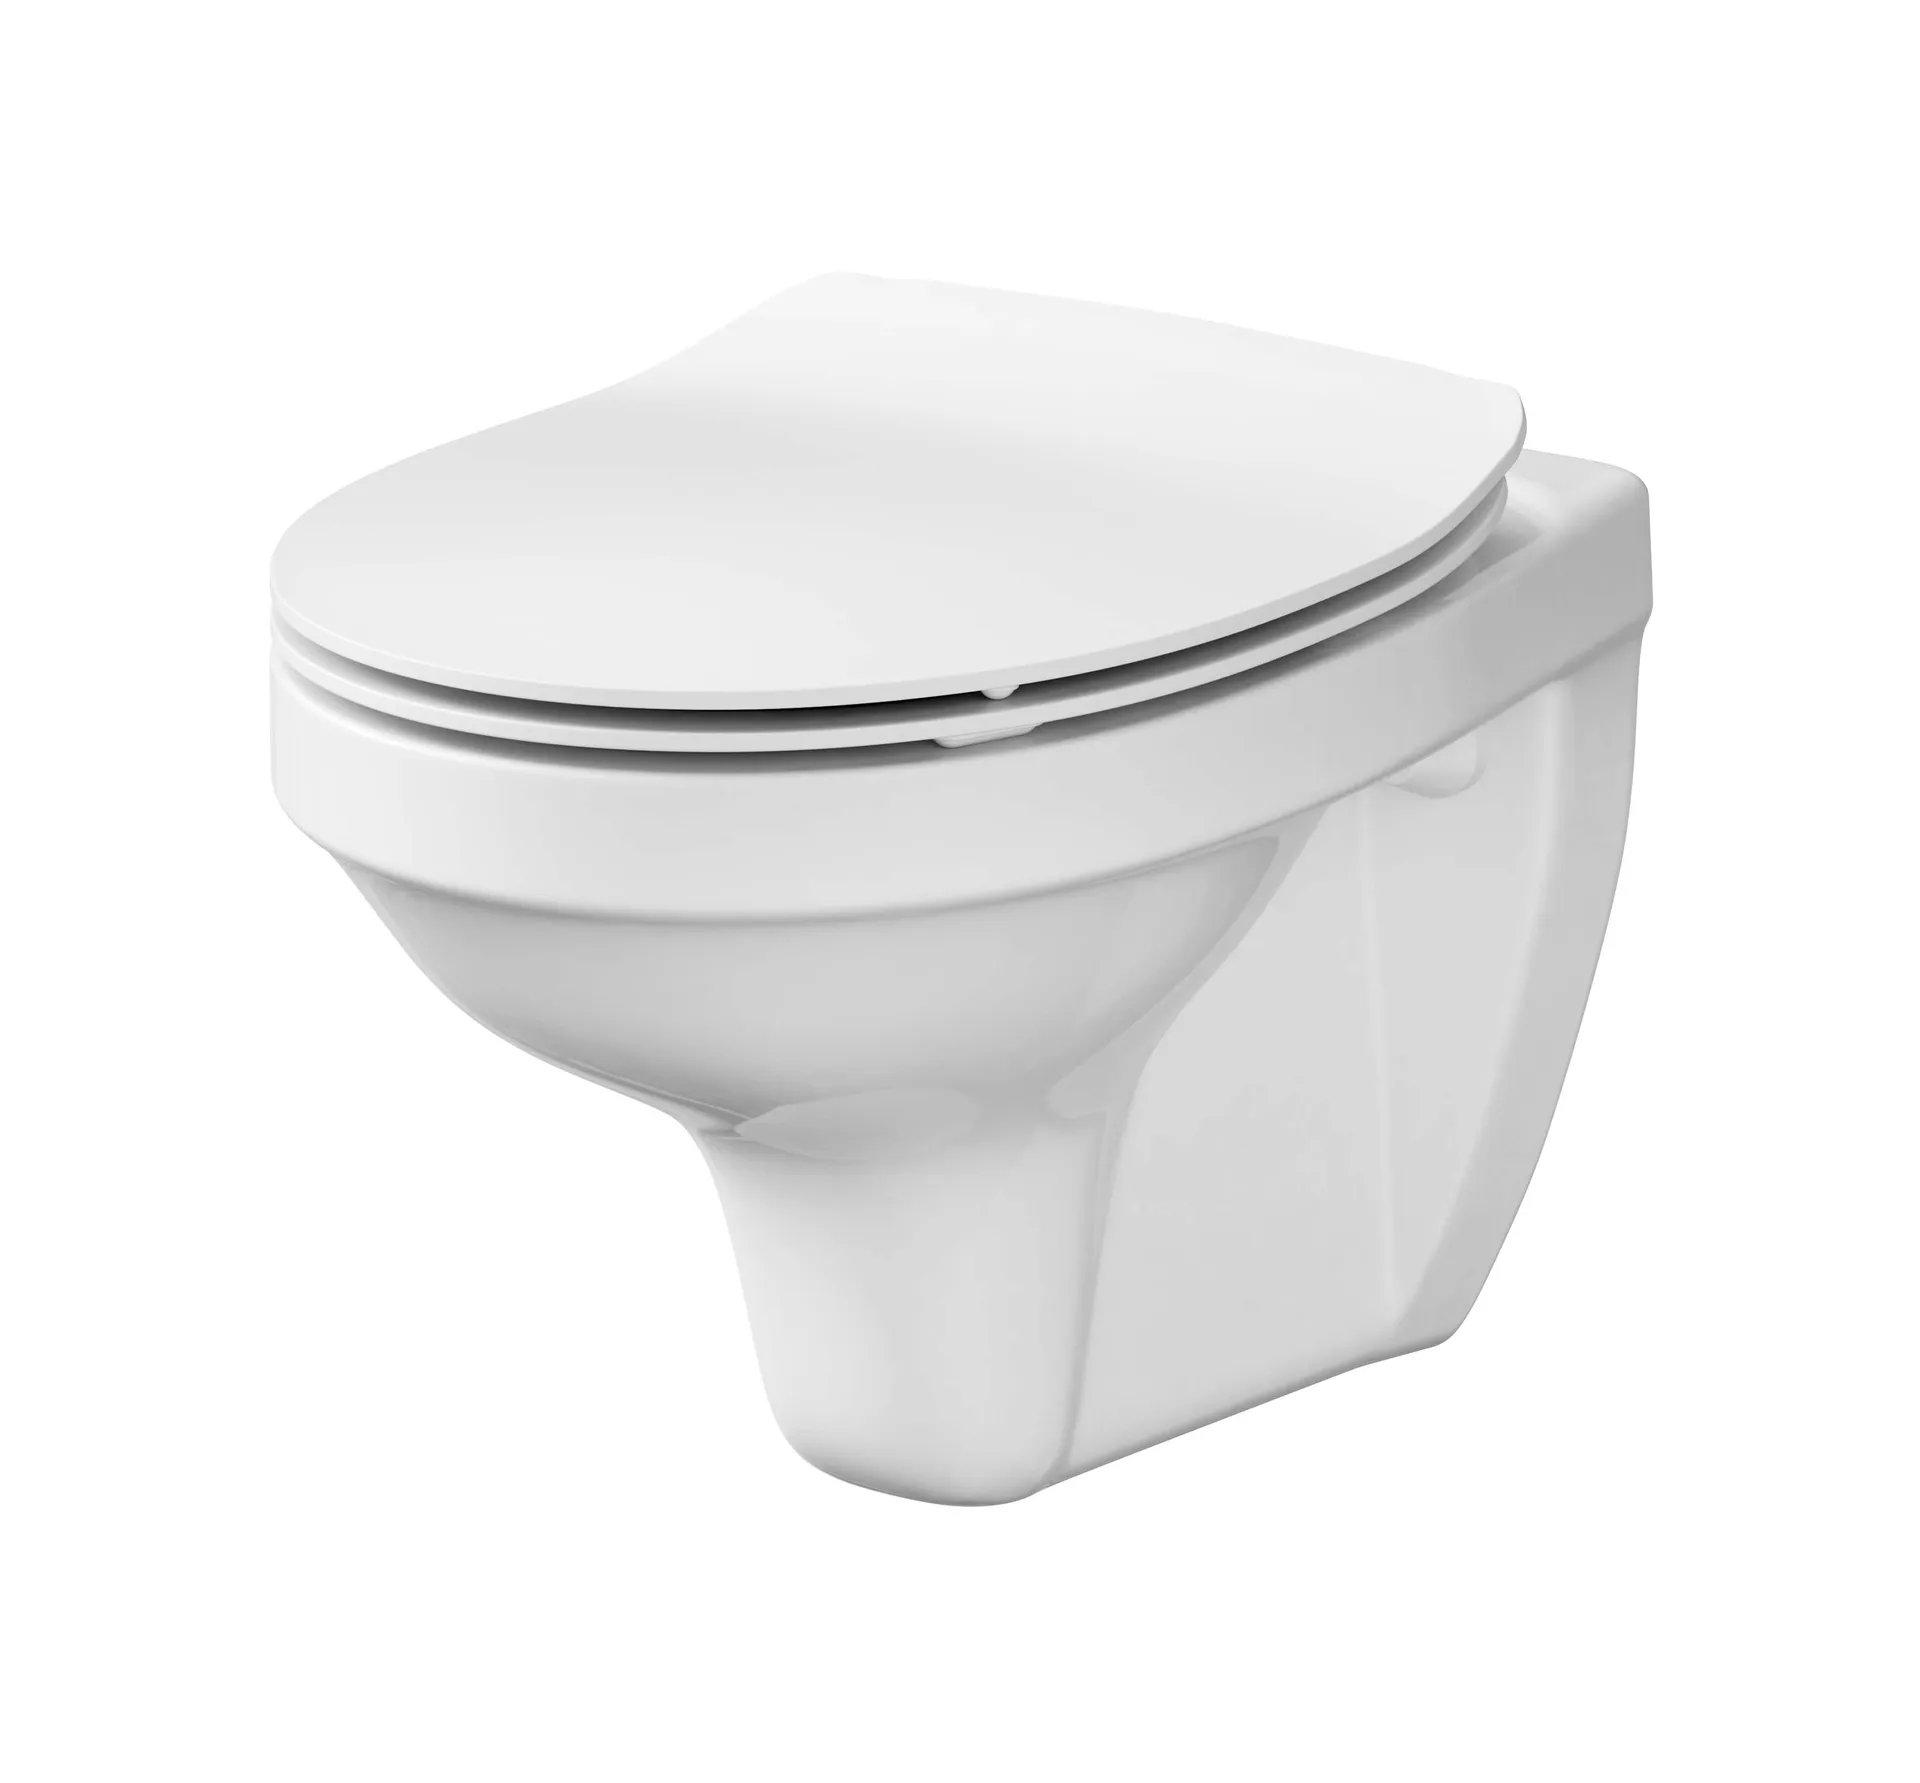 Miska WC wisząca Cersanit Delfi Cleanon bez deski K11-0021